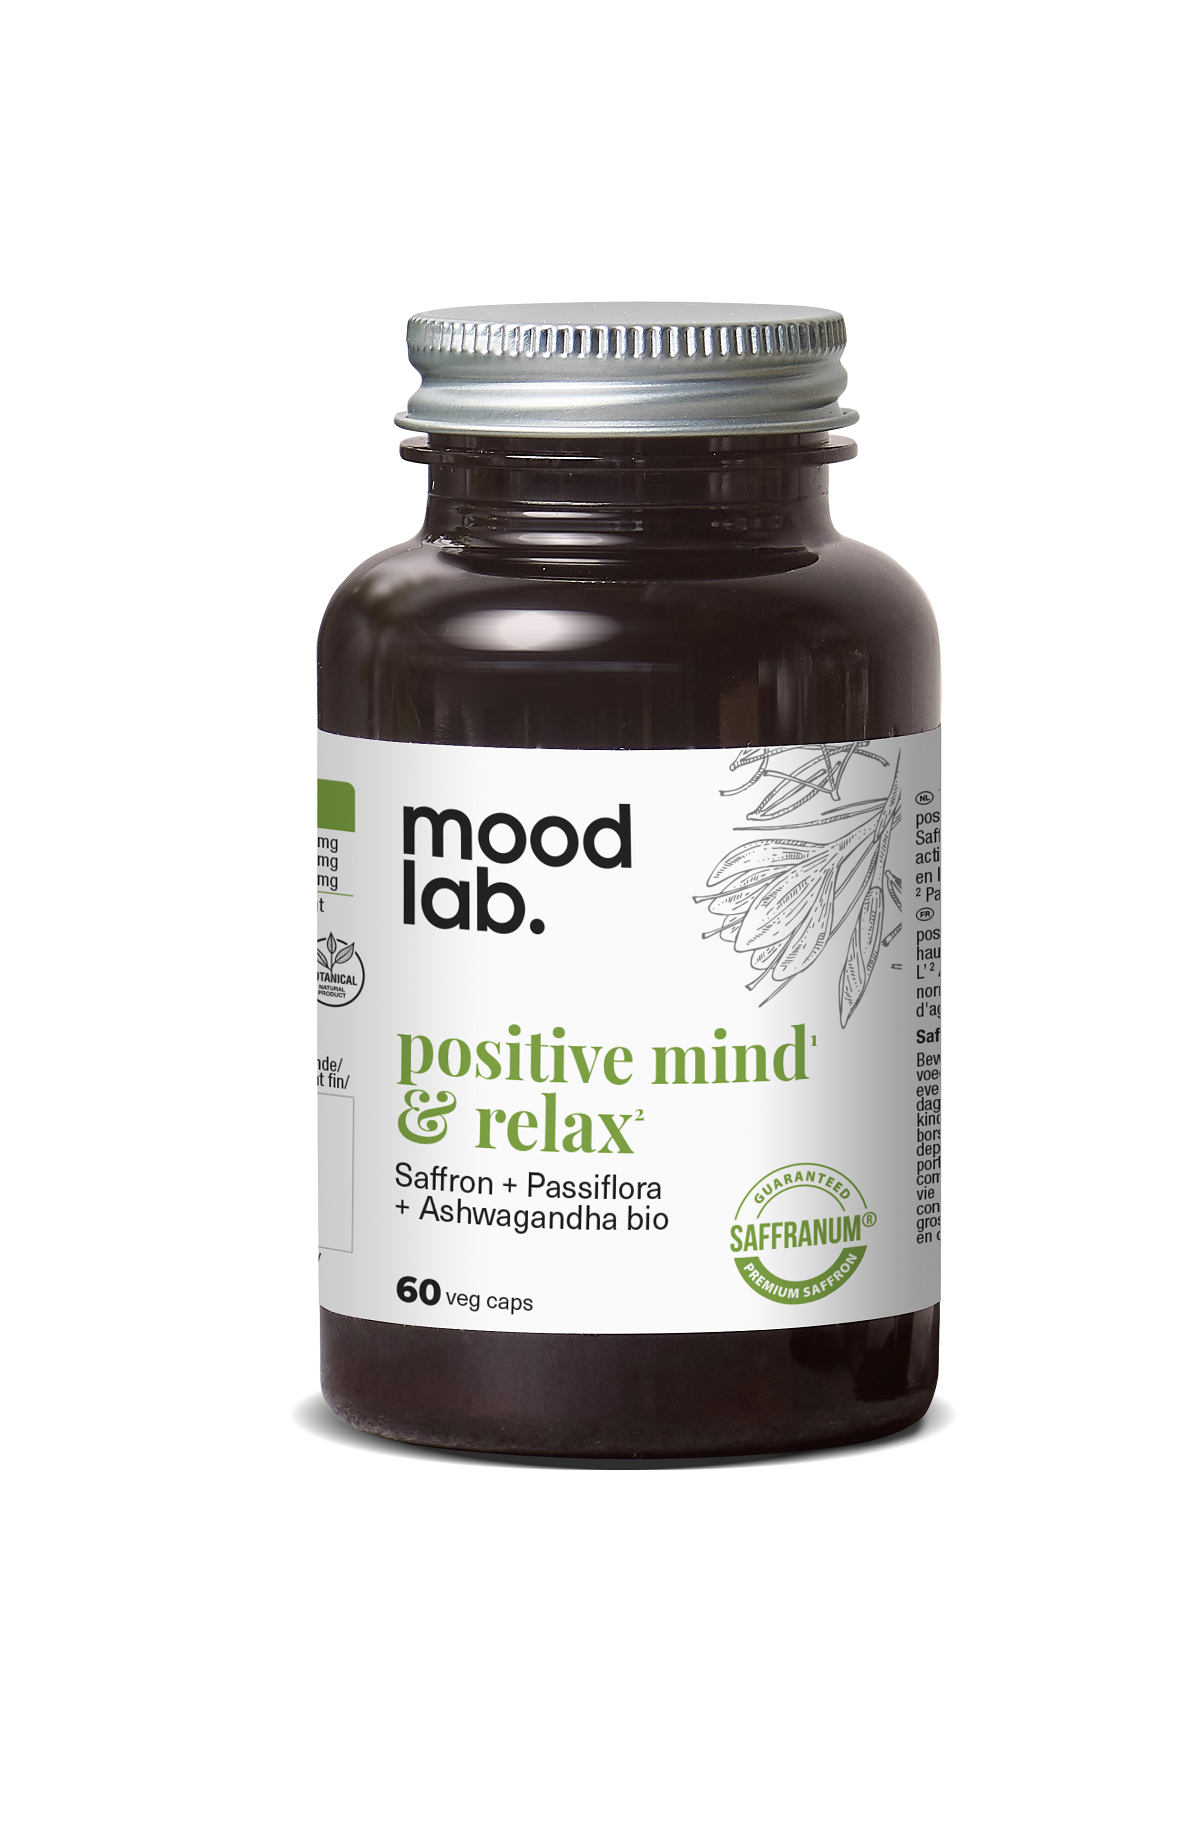 Positive Mind & Relax - 60 vegcaps